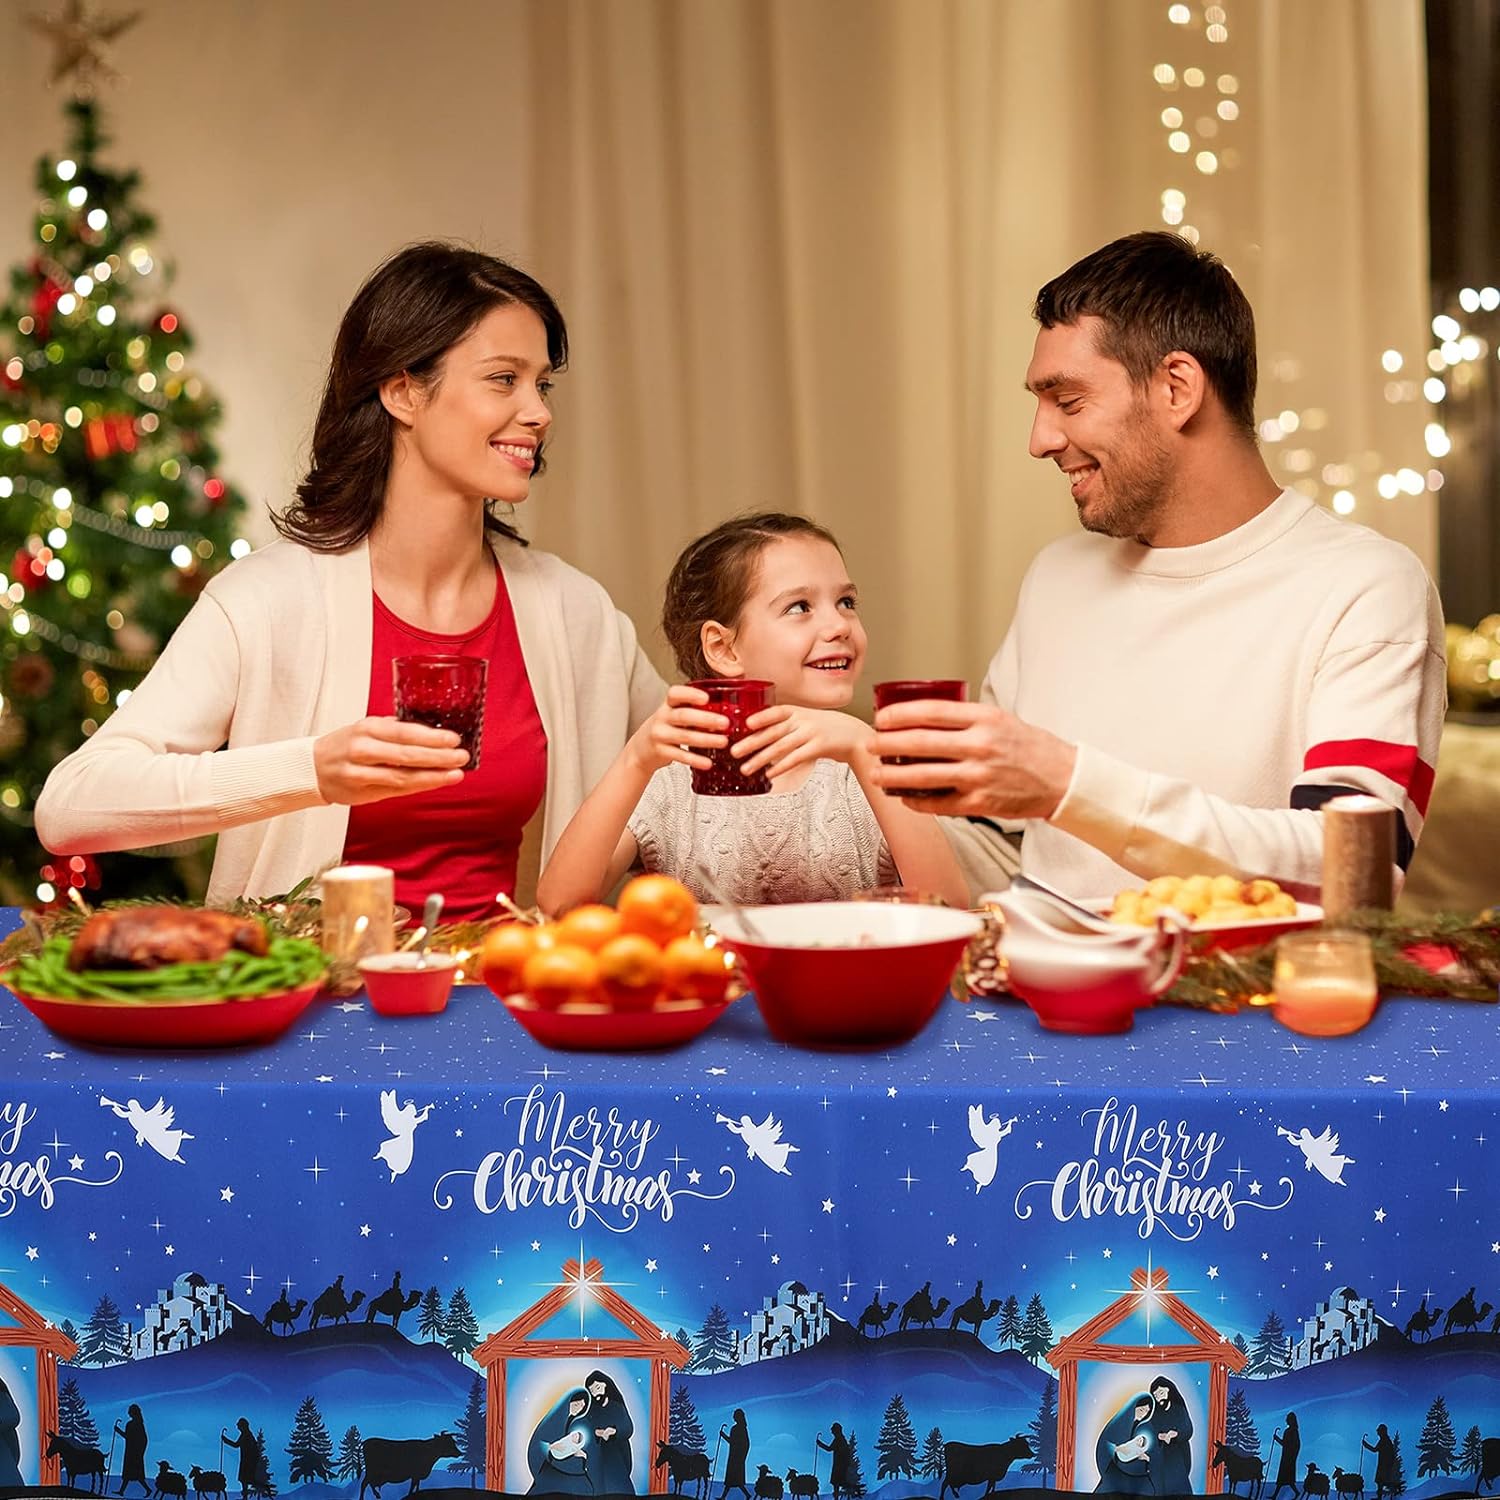 84x60 inch Christmas Tablecloth Fabric Xmas Nativity Scene Table Cover